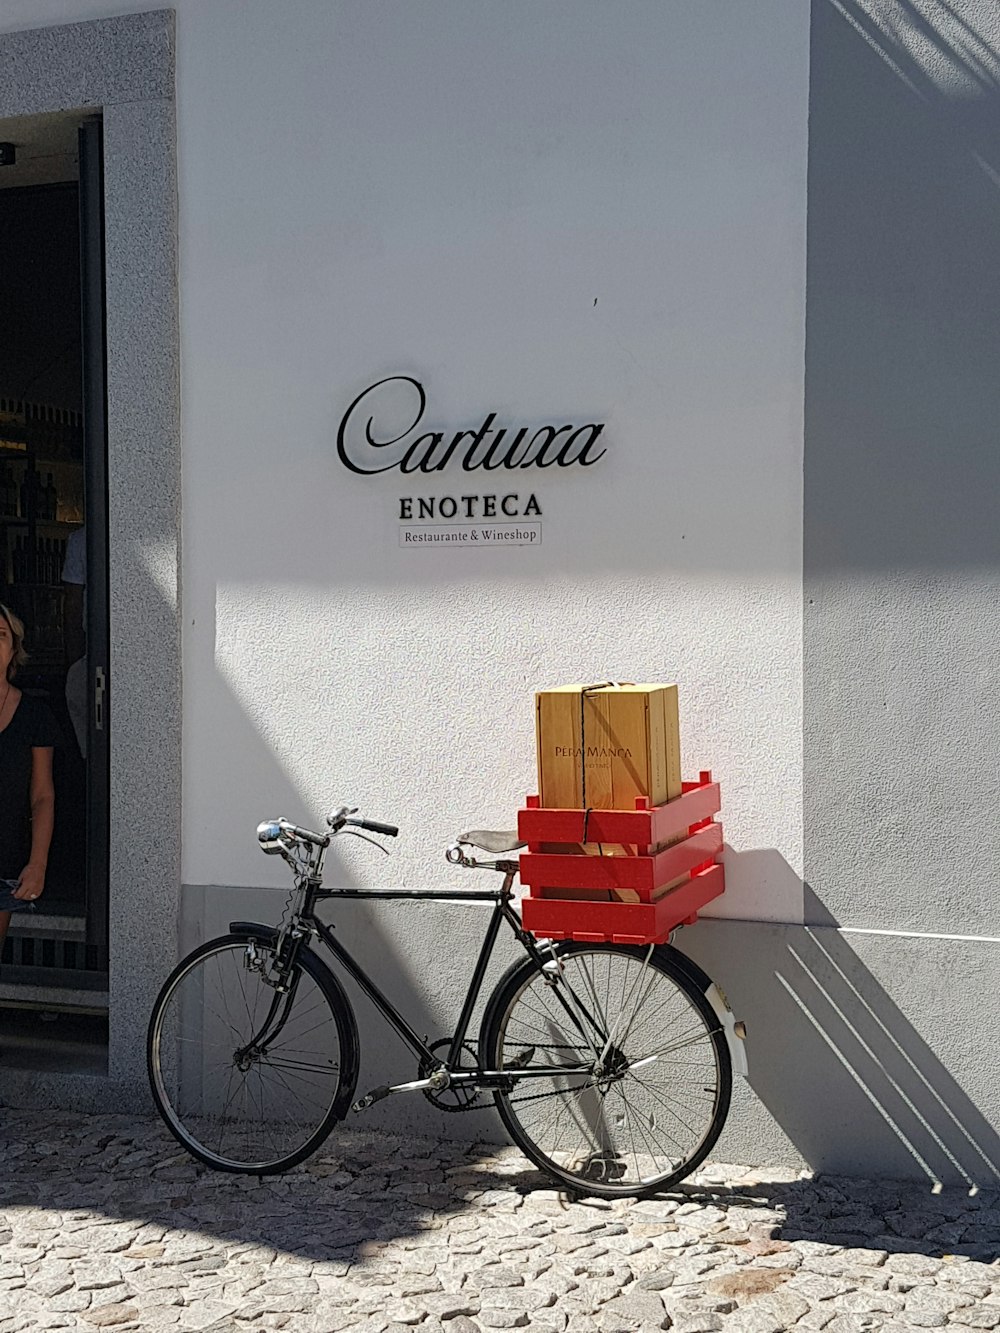 Bicicleta urbana negra con caja roja en la carretera